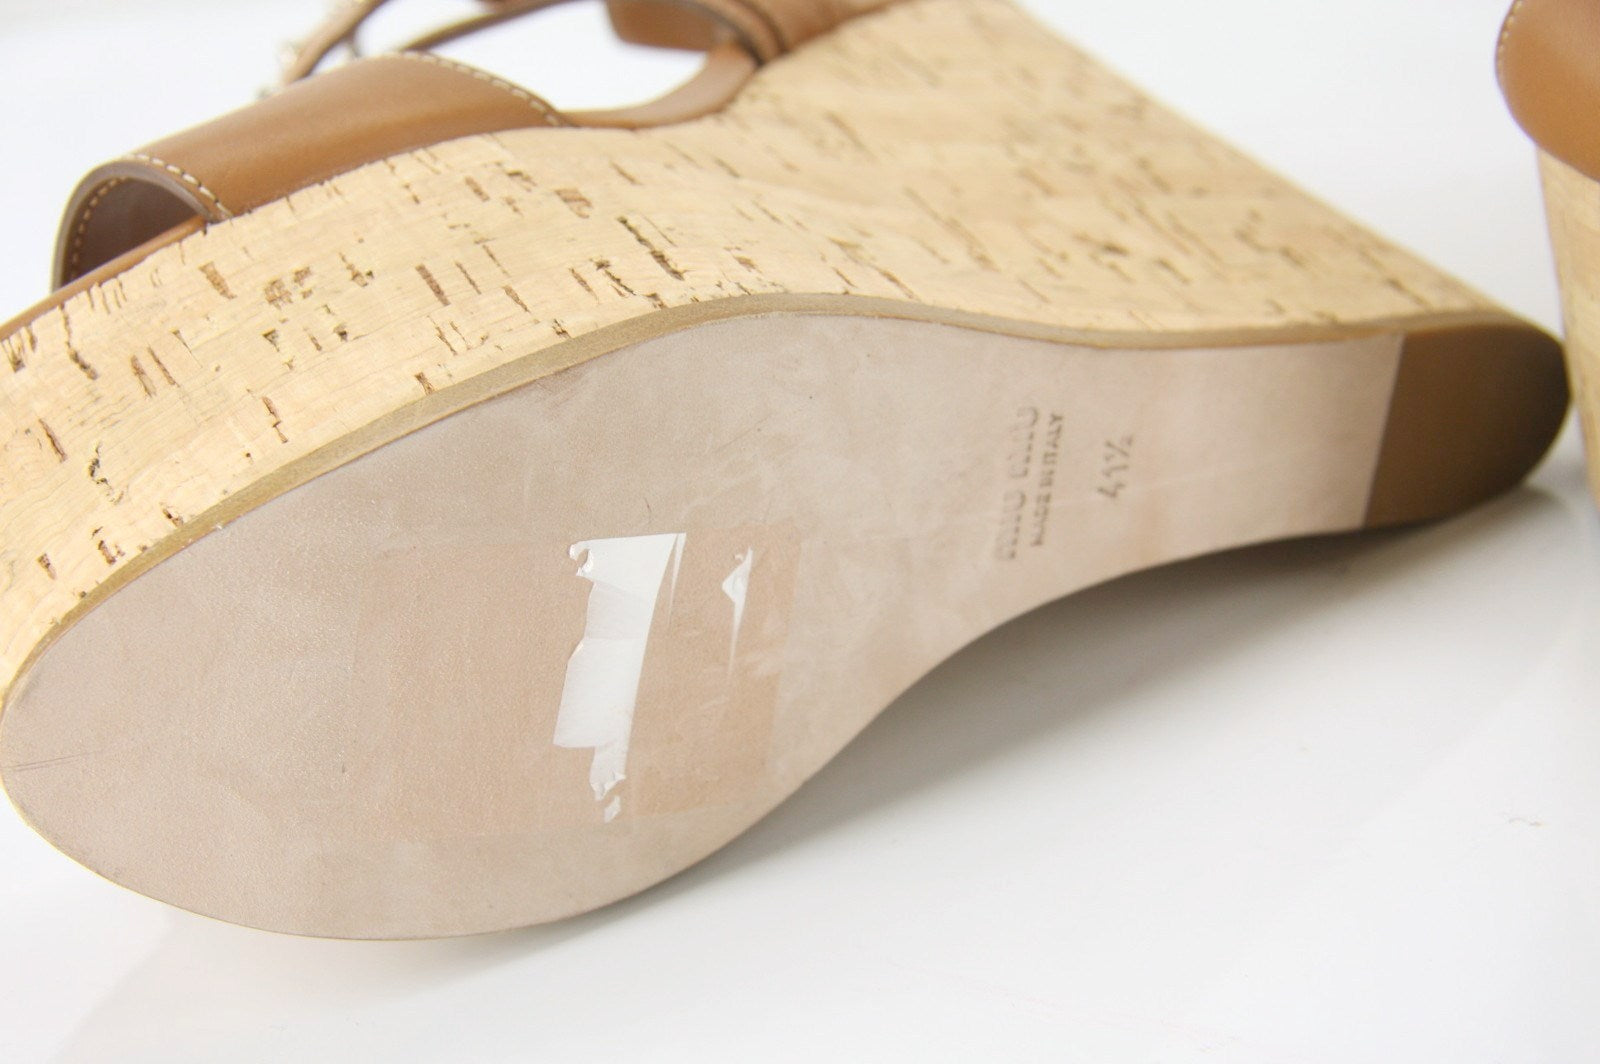 Miu Miu Brown Leather Studded Platform Wedge Sandals SZ 41.5 11.5 New $790 Prada